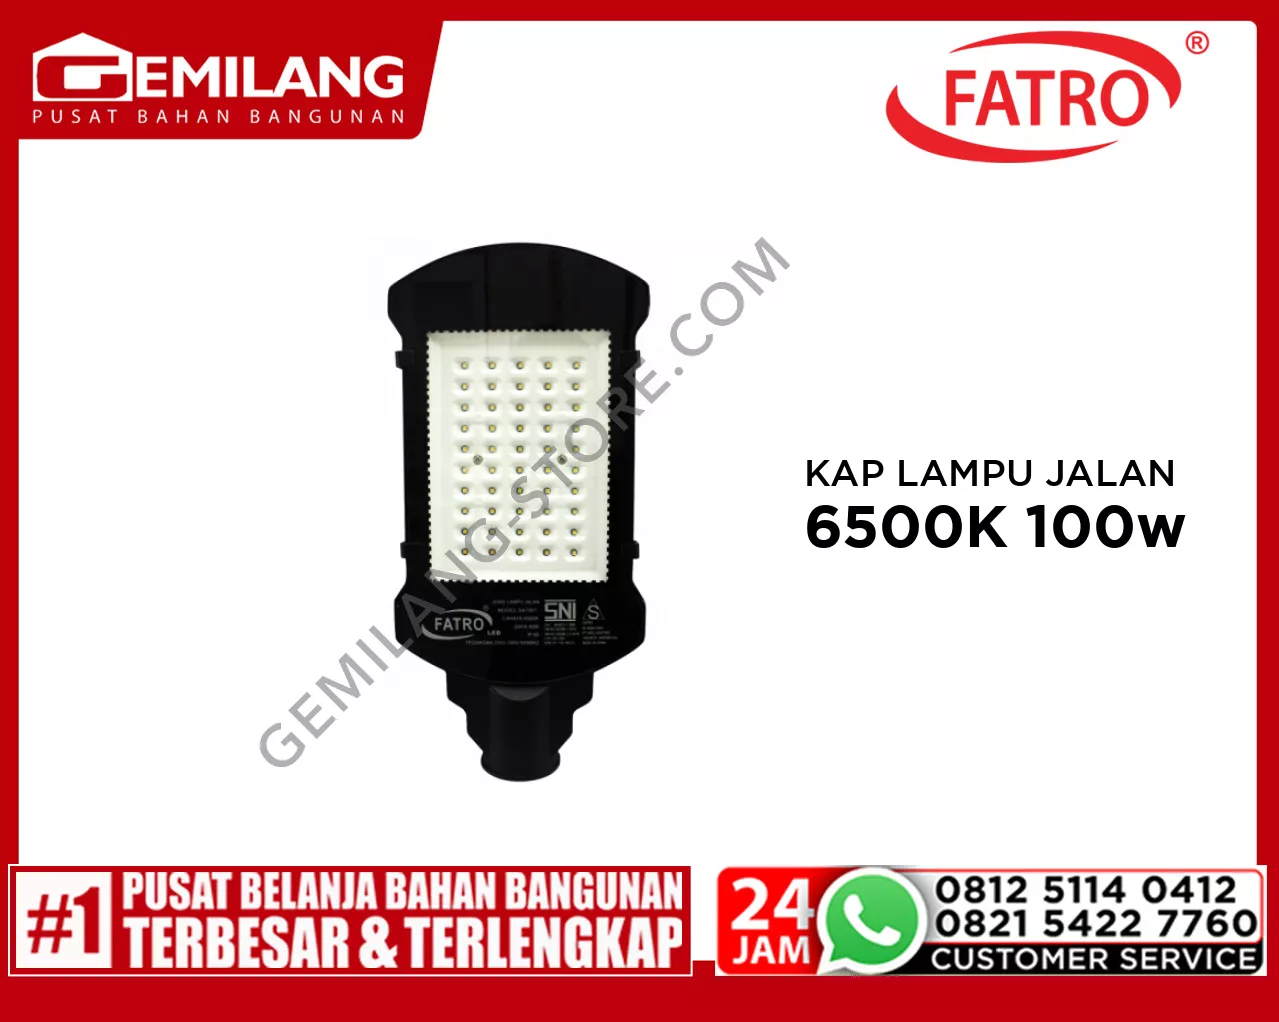 FATRO KAP LAMPU JALAN LED SA-7001 6500K 100w